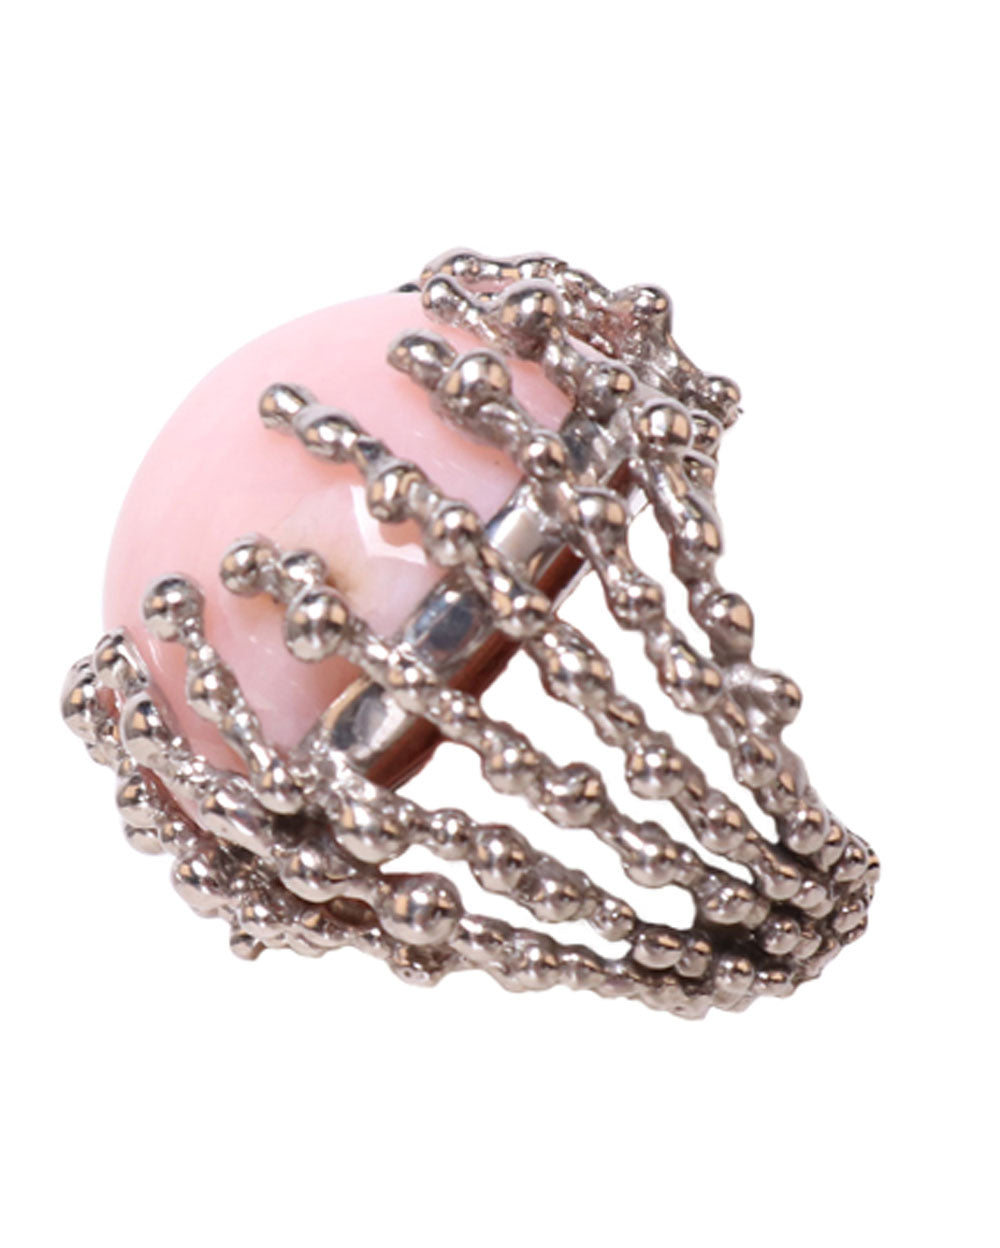 Pink Opal Boule Ring